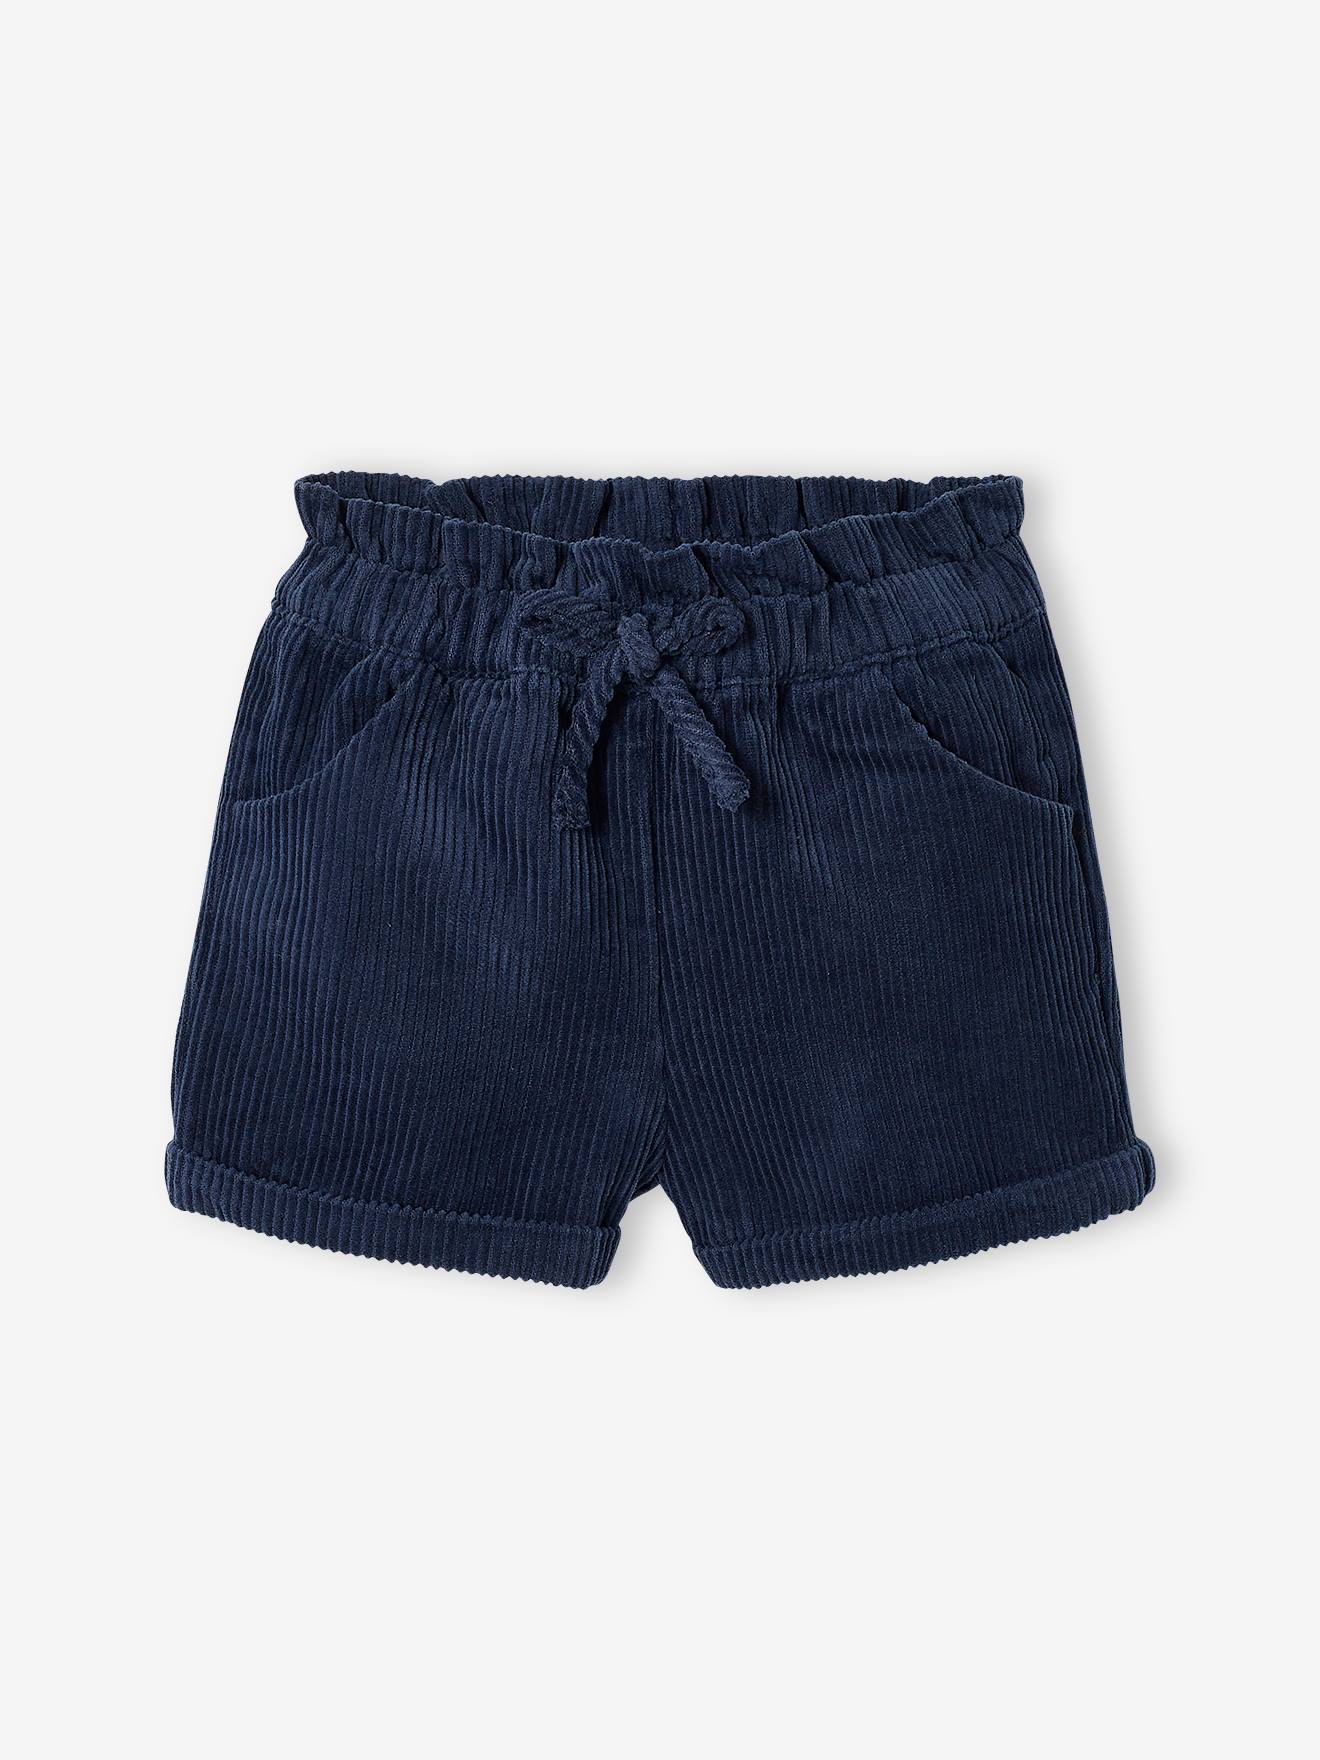 Corduroy Shorts for Baby Girls blue dark solid